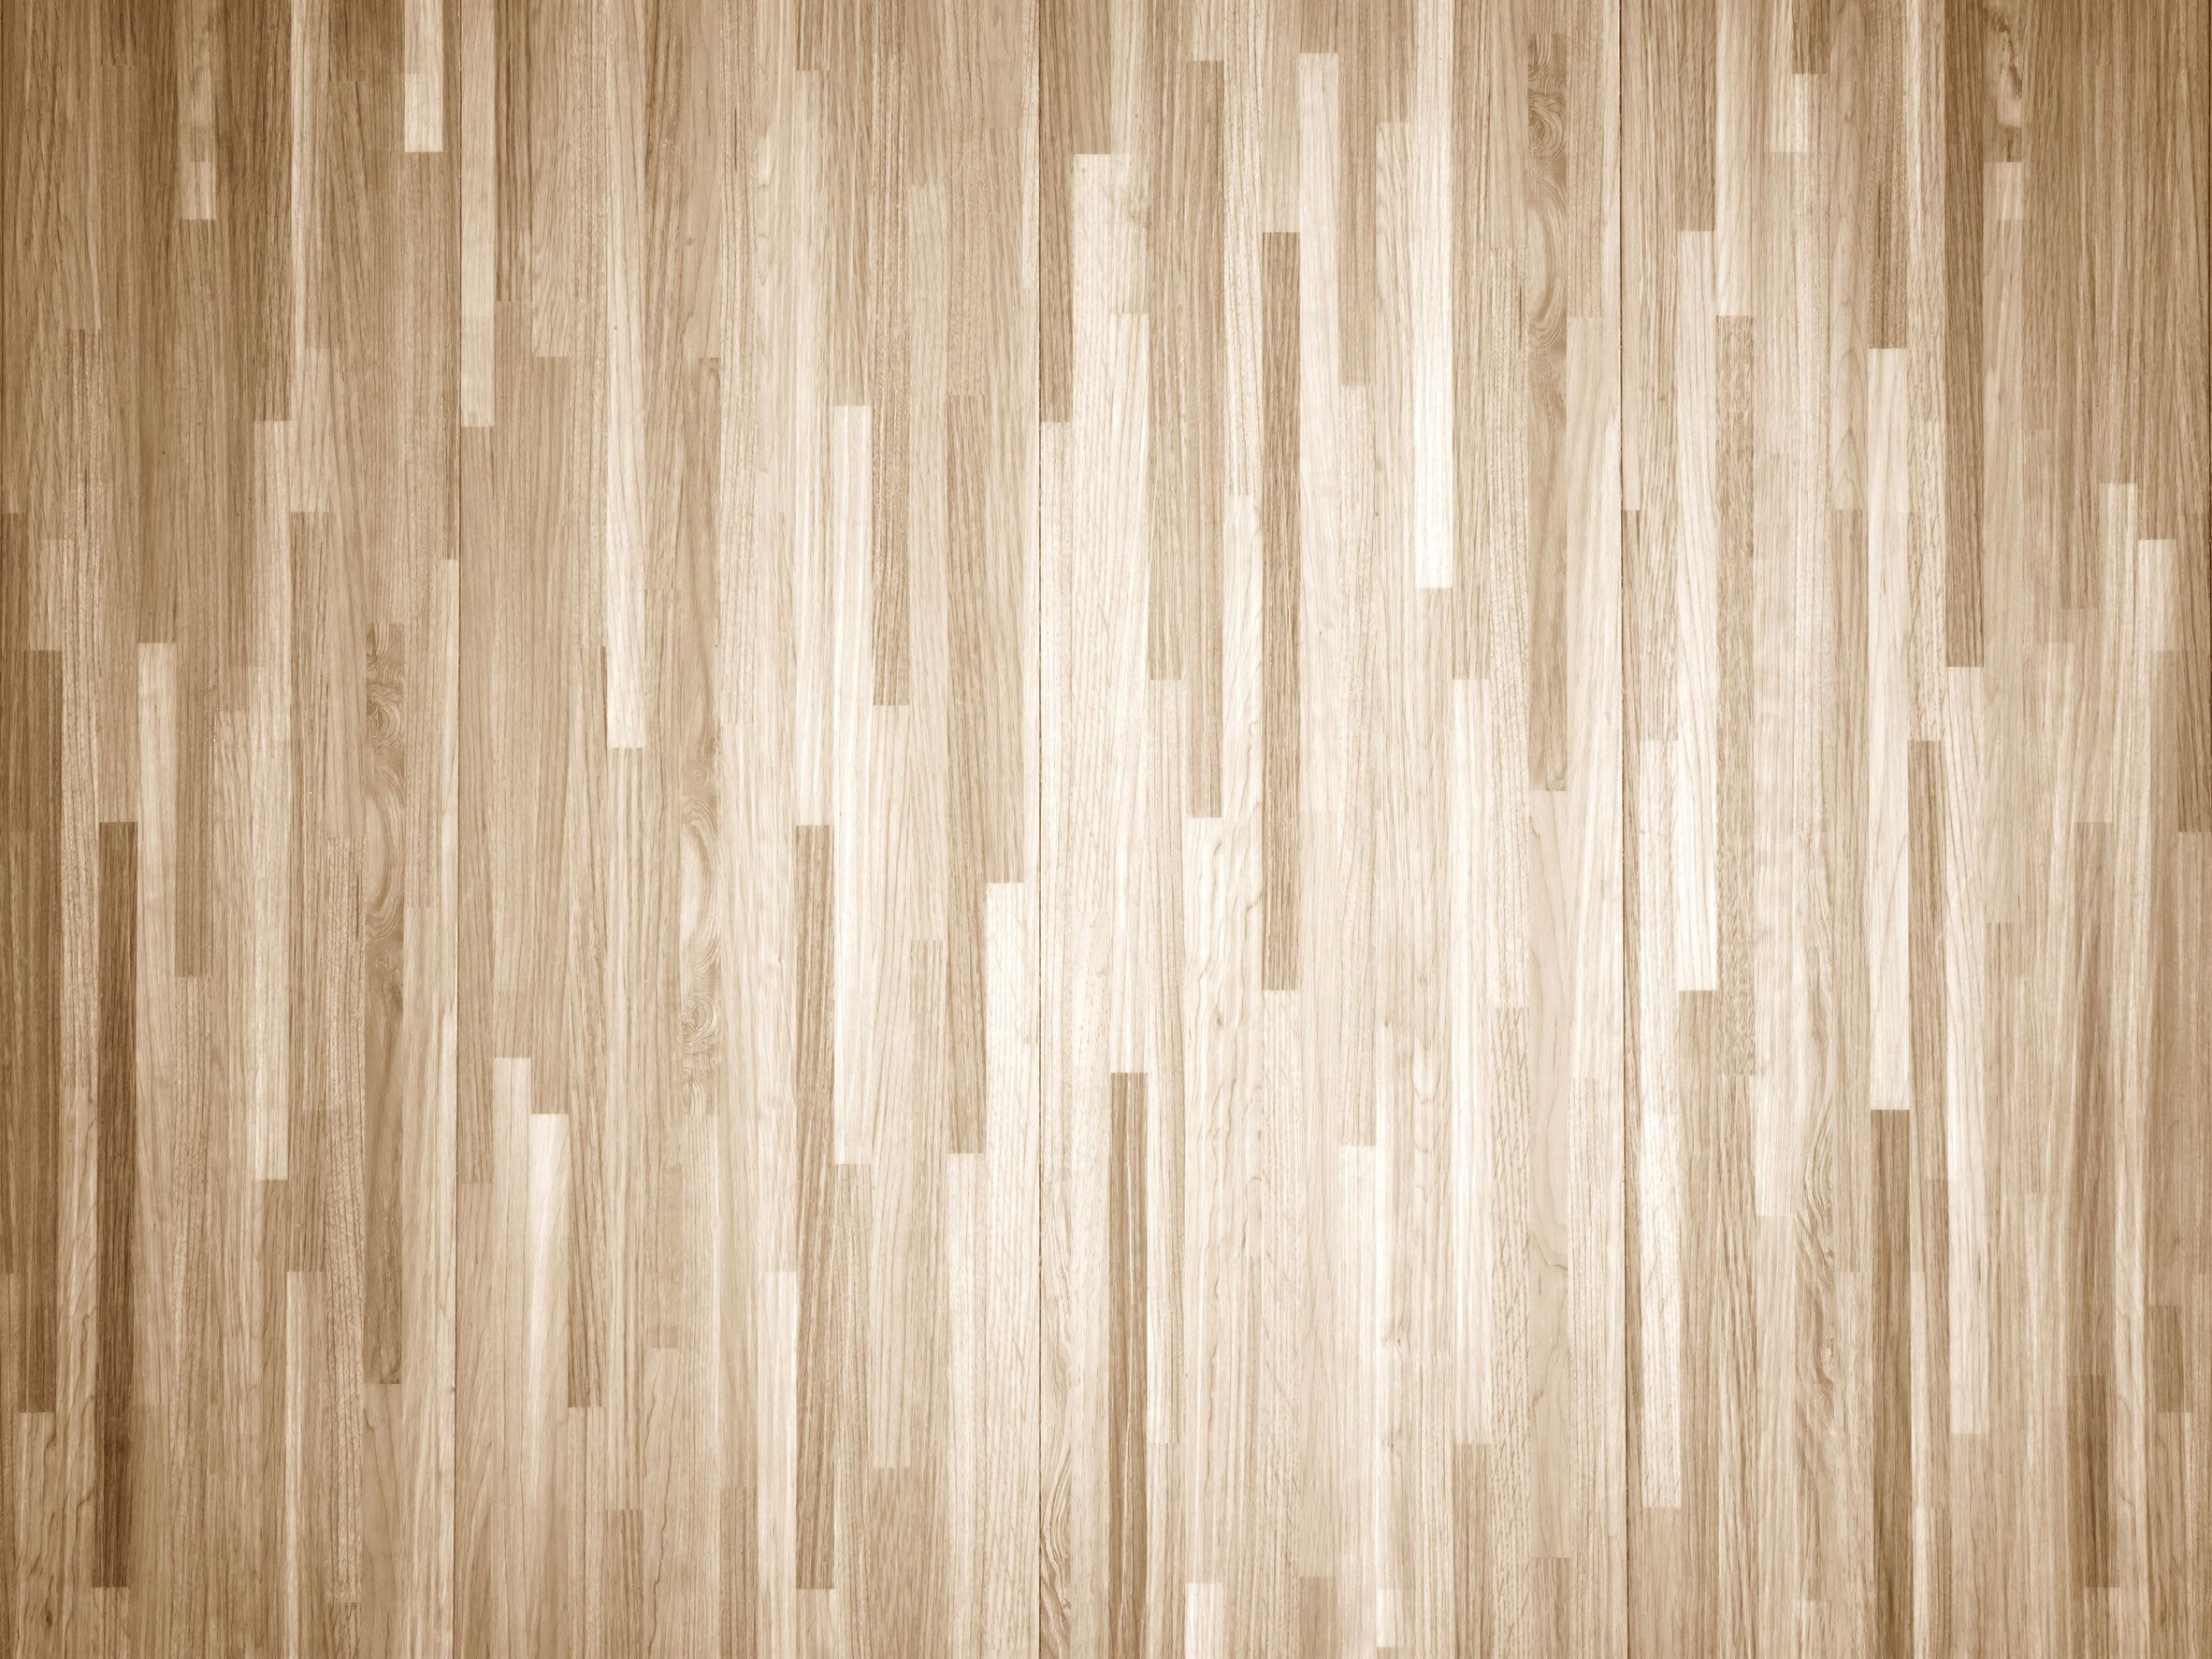 20 Great 2 Different Color Hardwood Floors 2024 free download 2 different color hardwood floors of how to chemically strip wood floors woodfloordoctor com for you